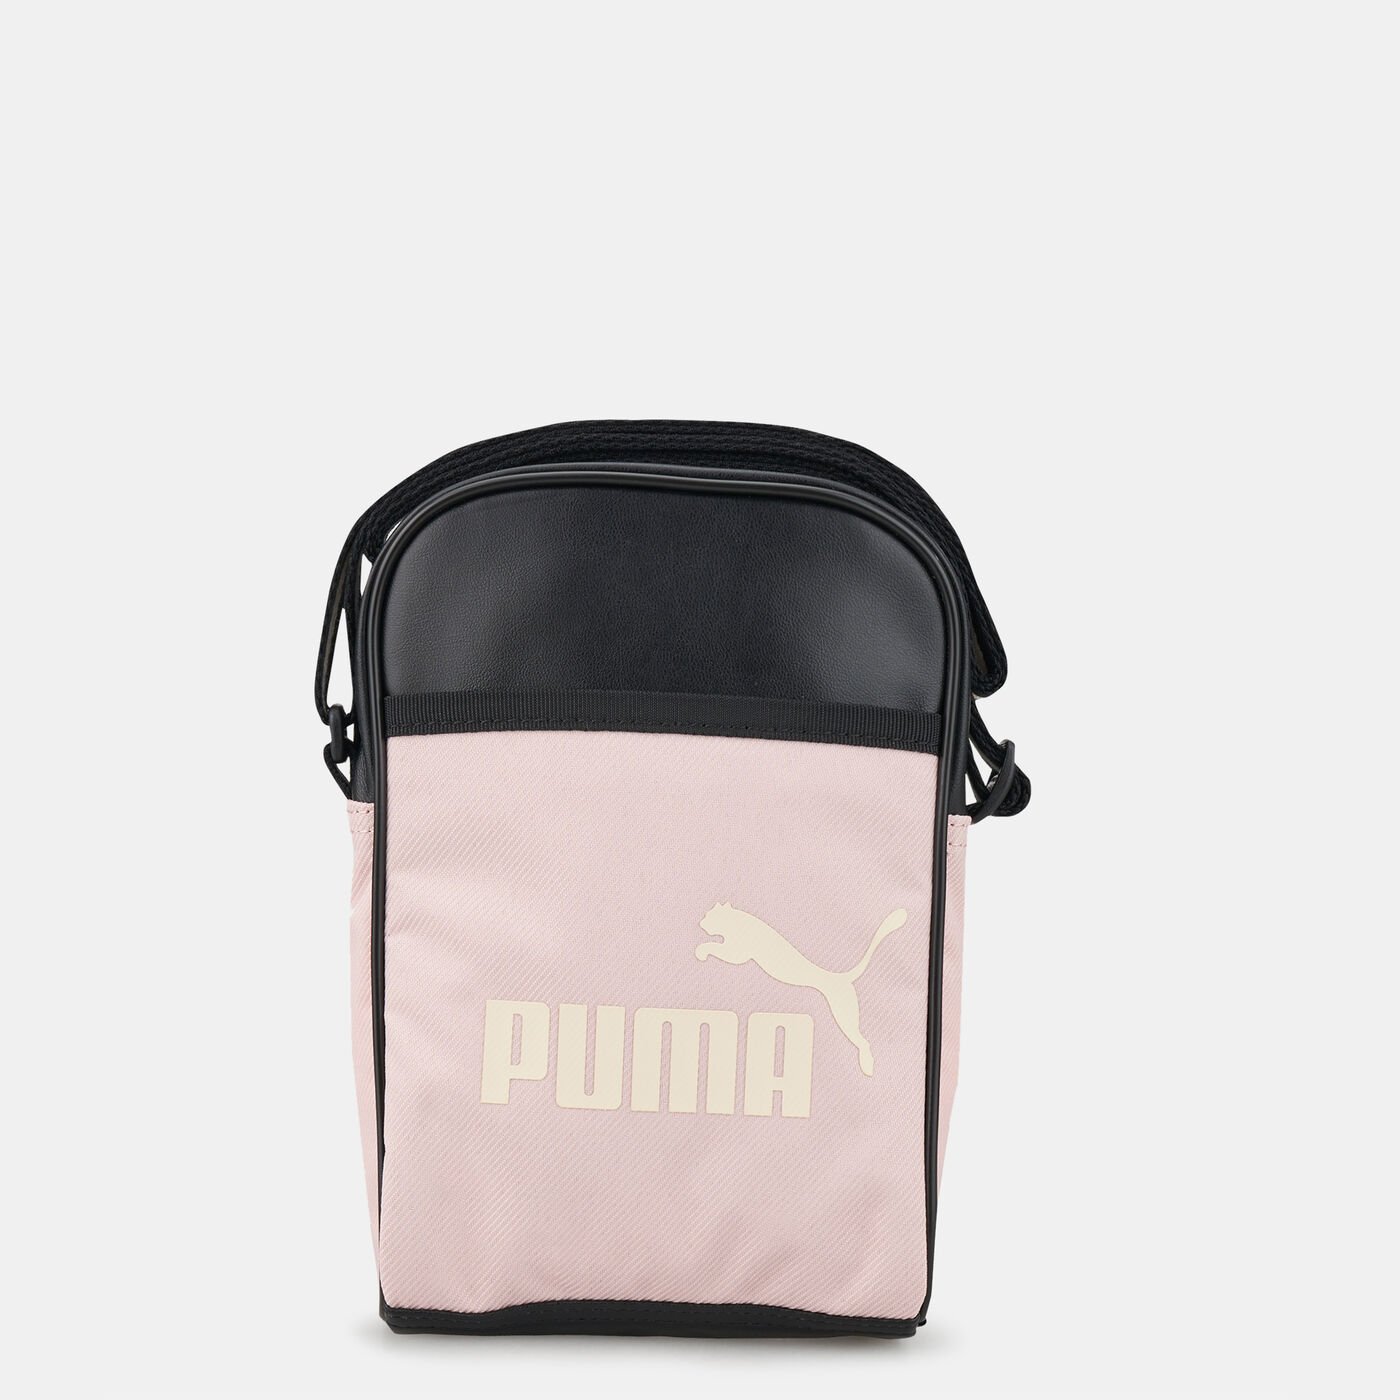 Men's Campus Compact Portable Messenger Bag